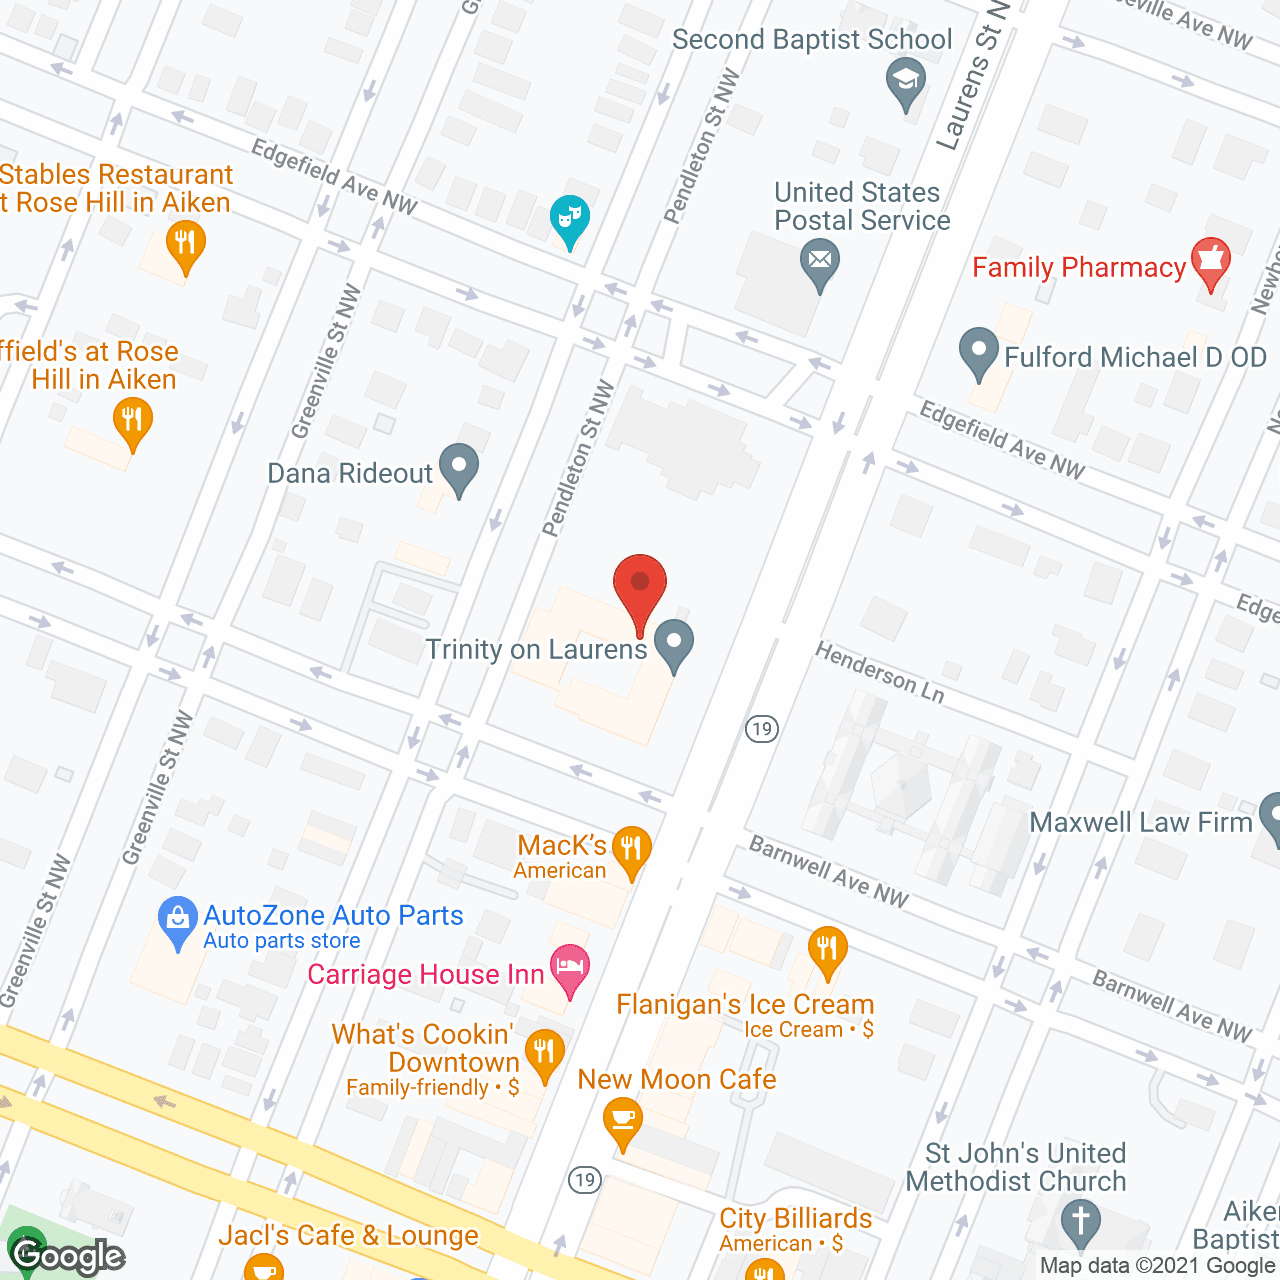 Trinity on Laurens in google map